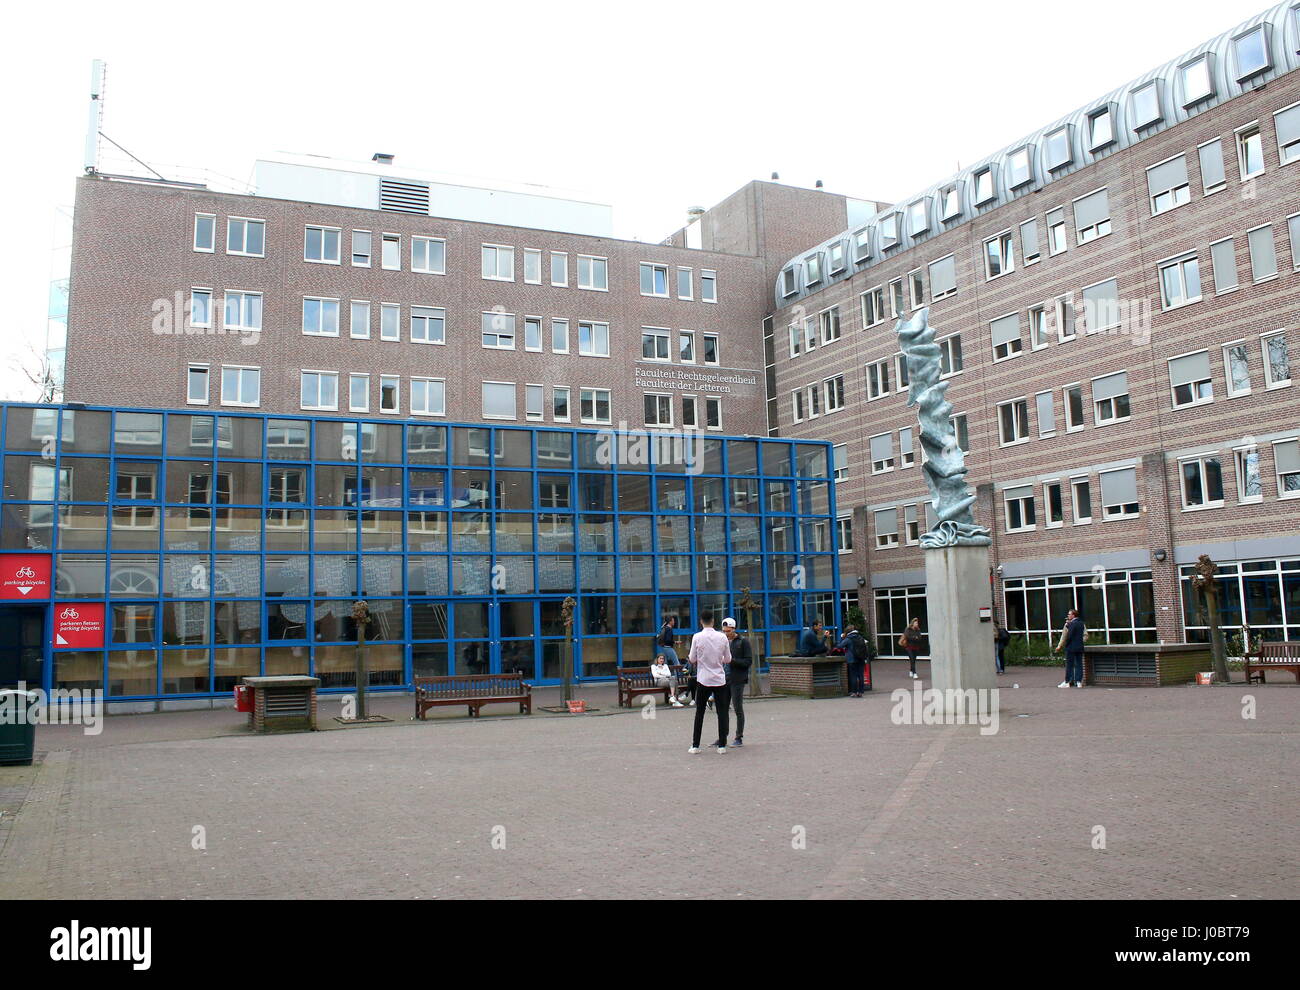 Harmonie complex, buildings of the Faculty of Arts, Law & Humanities, University of Groningen, Netherlands. located at Oude Kijk in 't Jatstraat Stock Photo